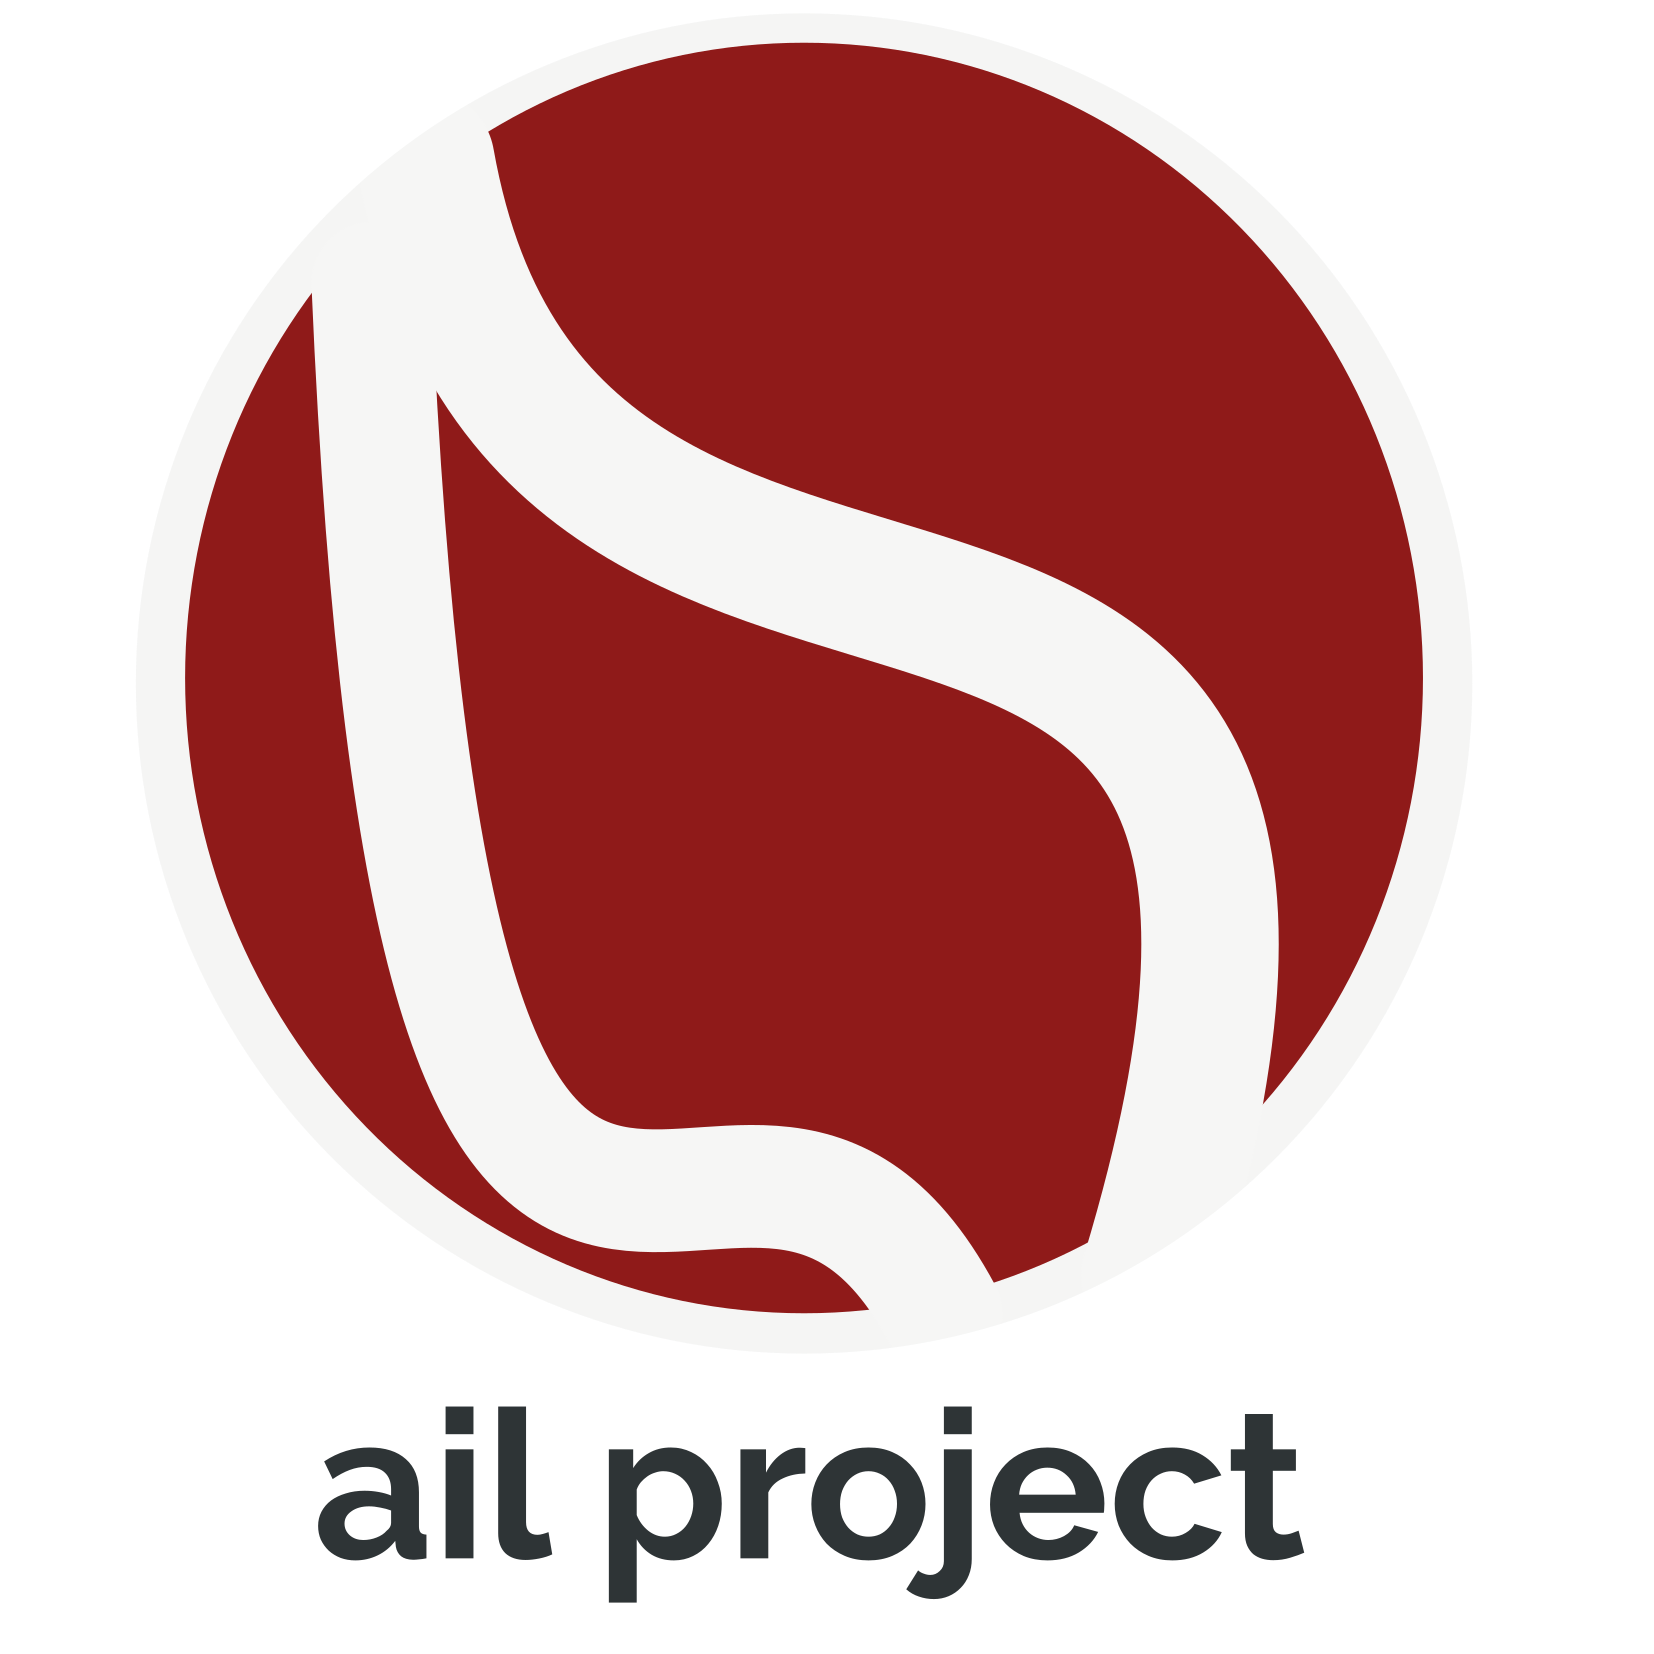 ail project logo - 200 dpi